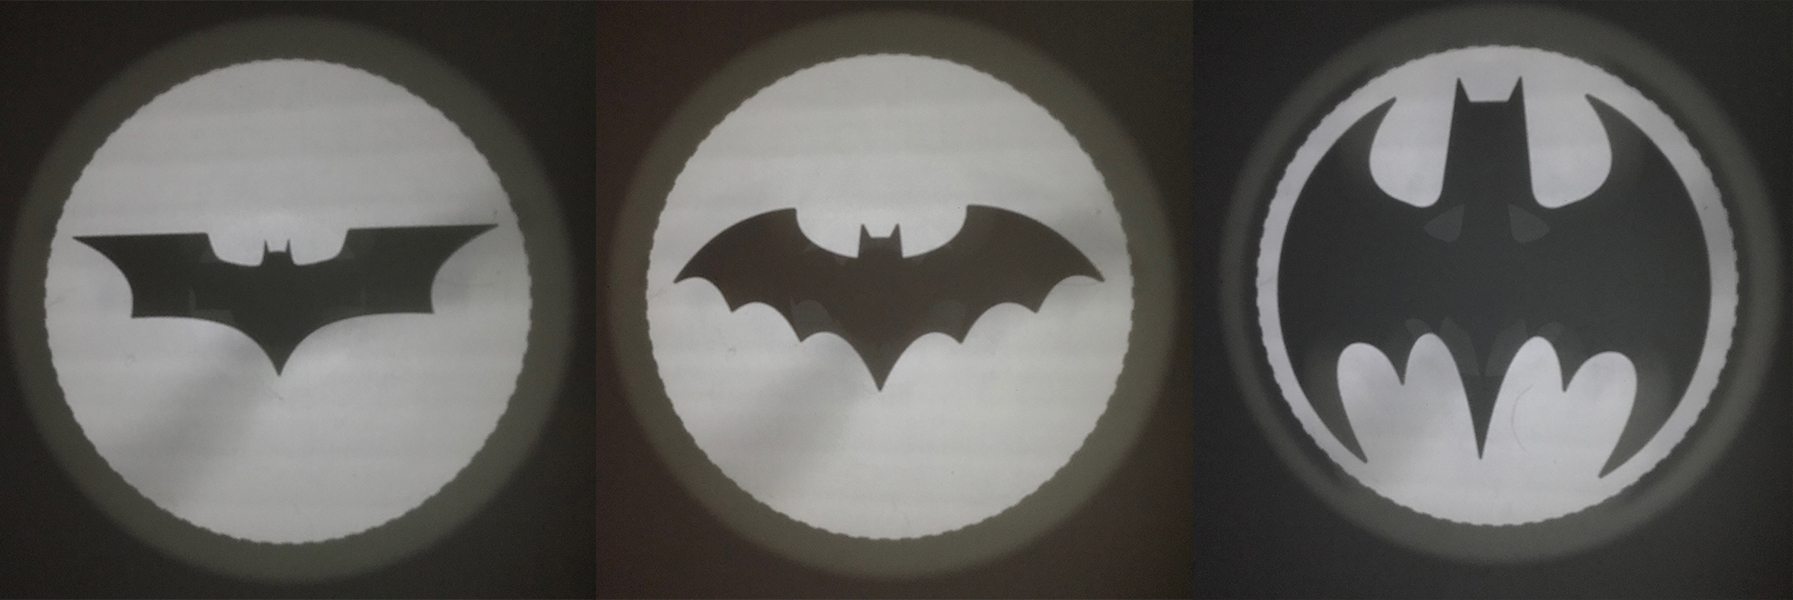 Bat Symbols Image: Dakster Sullivan